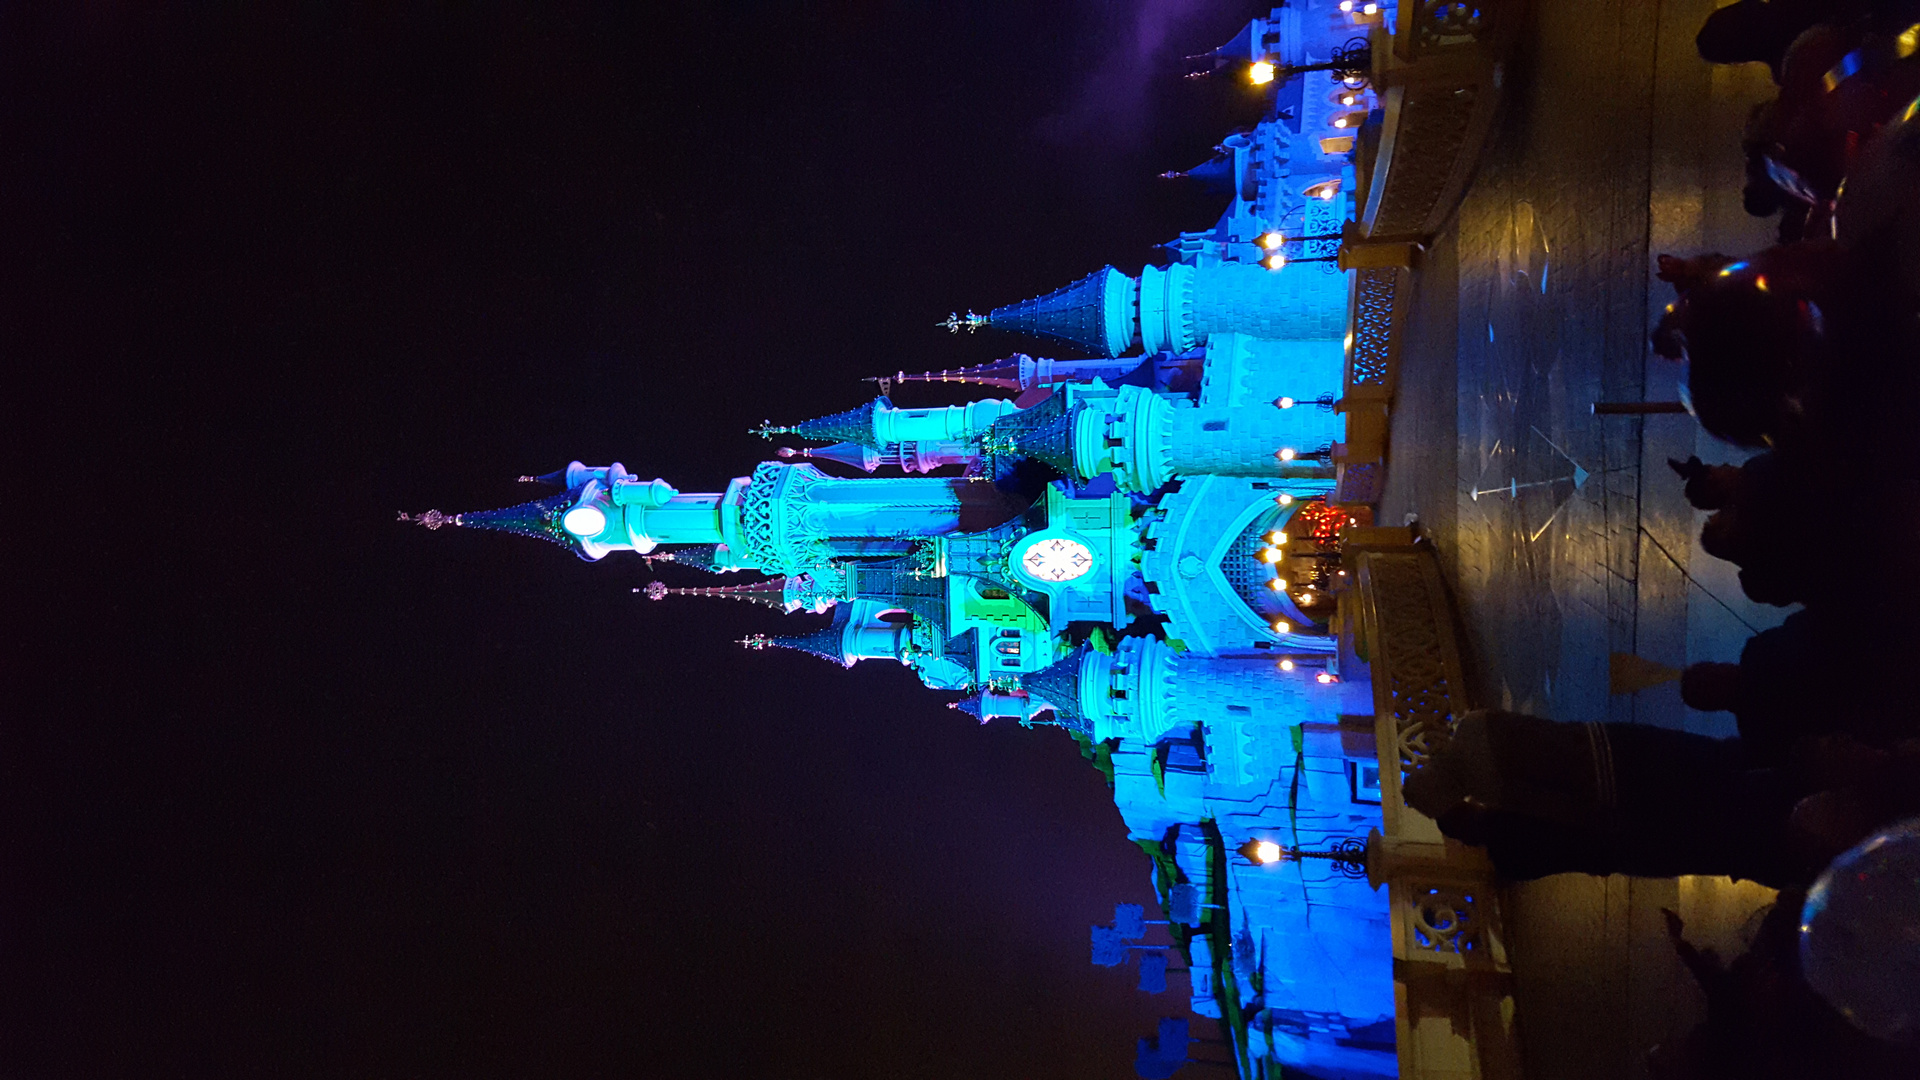 Disneyland Schloss